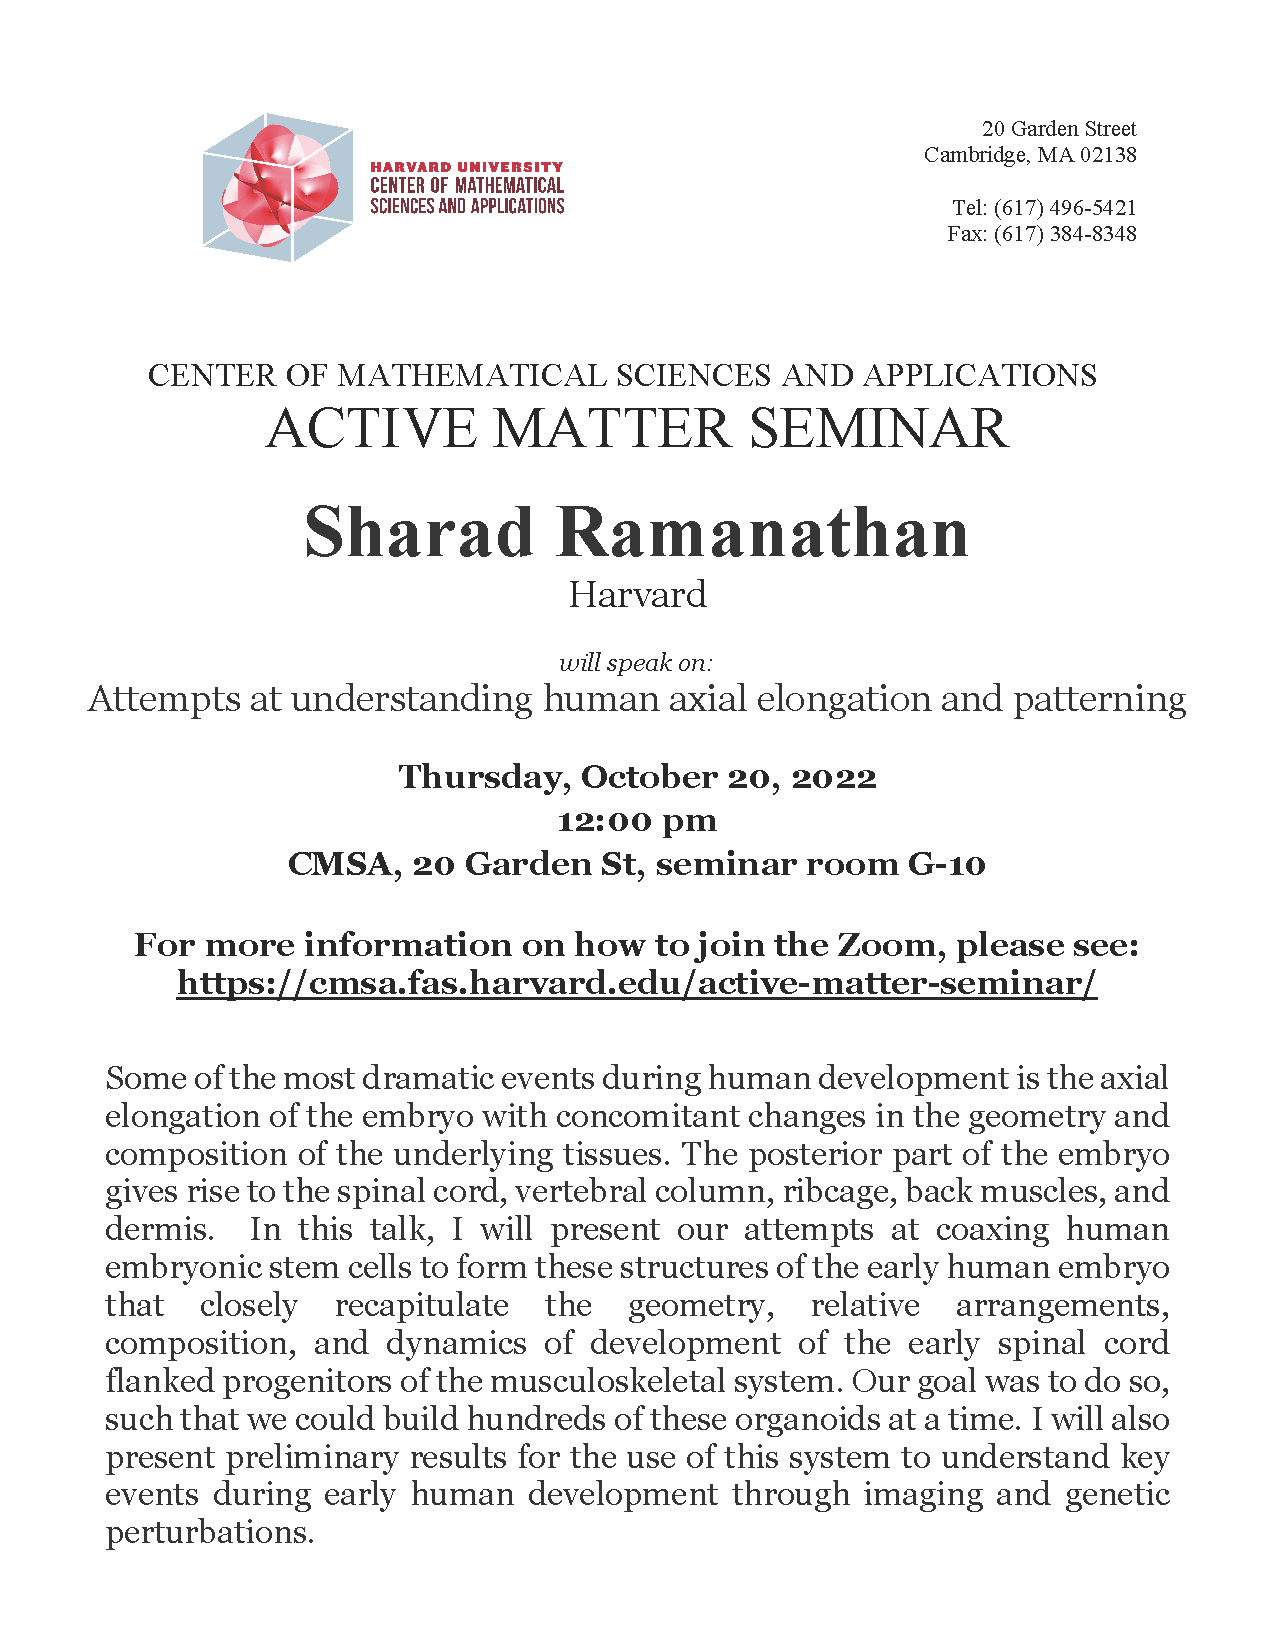 CMSA Active Matter Seminar 10.20.22